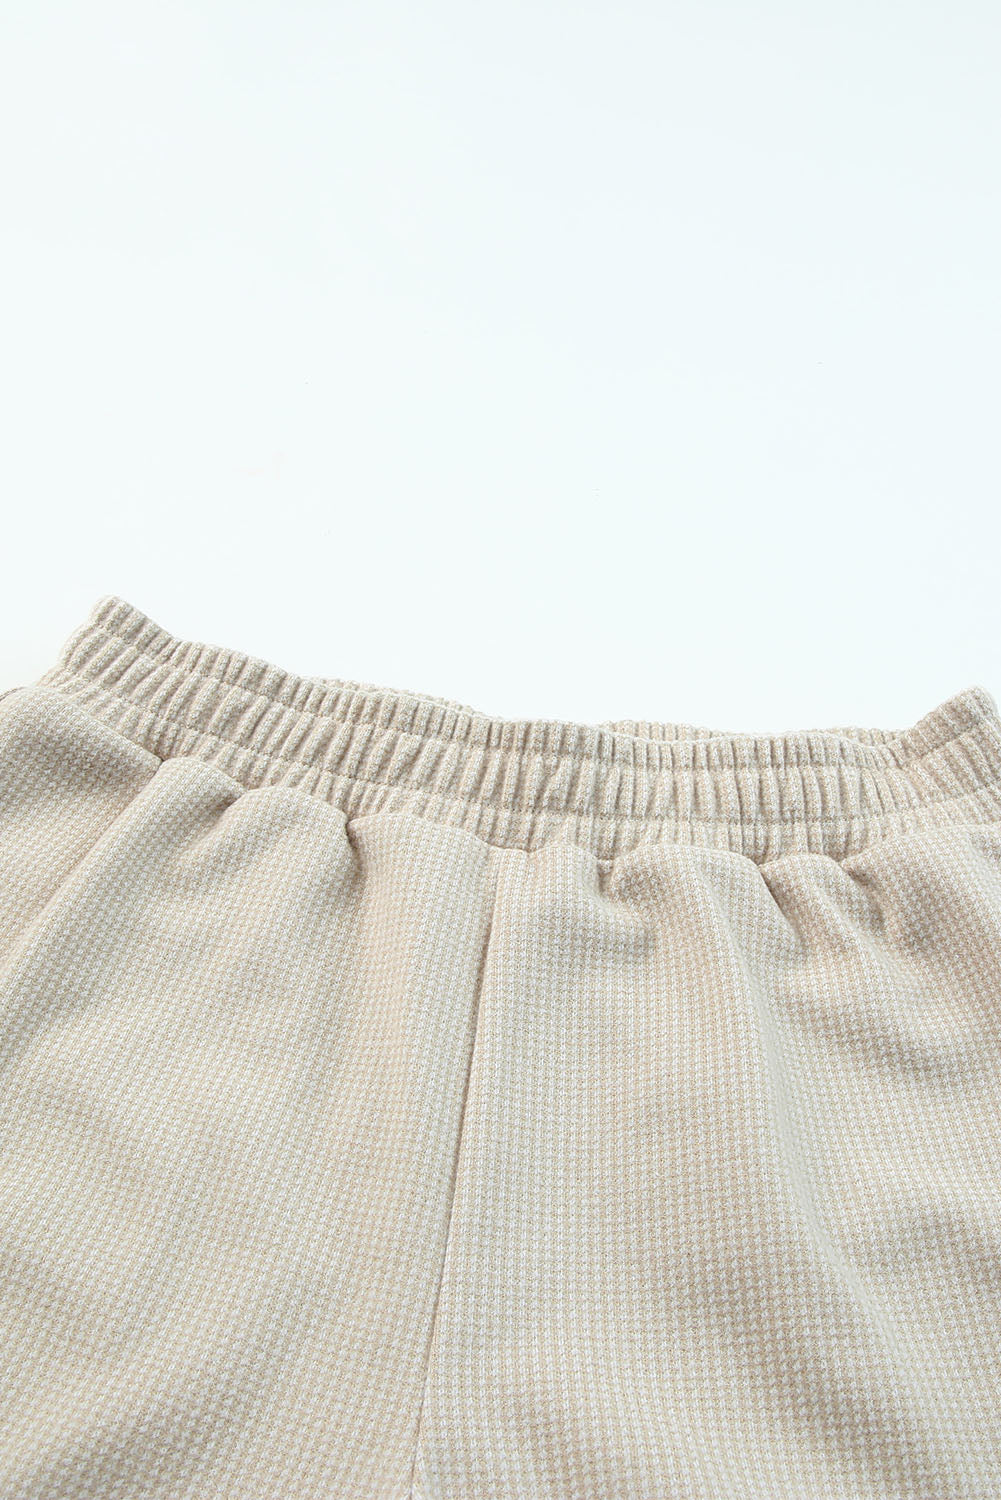 Apricot Tweed Wide Elastic Band High Waist Shorts